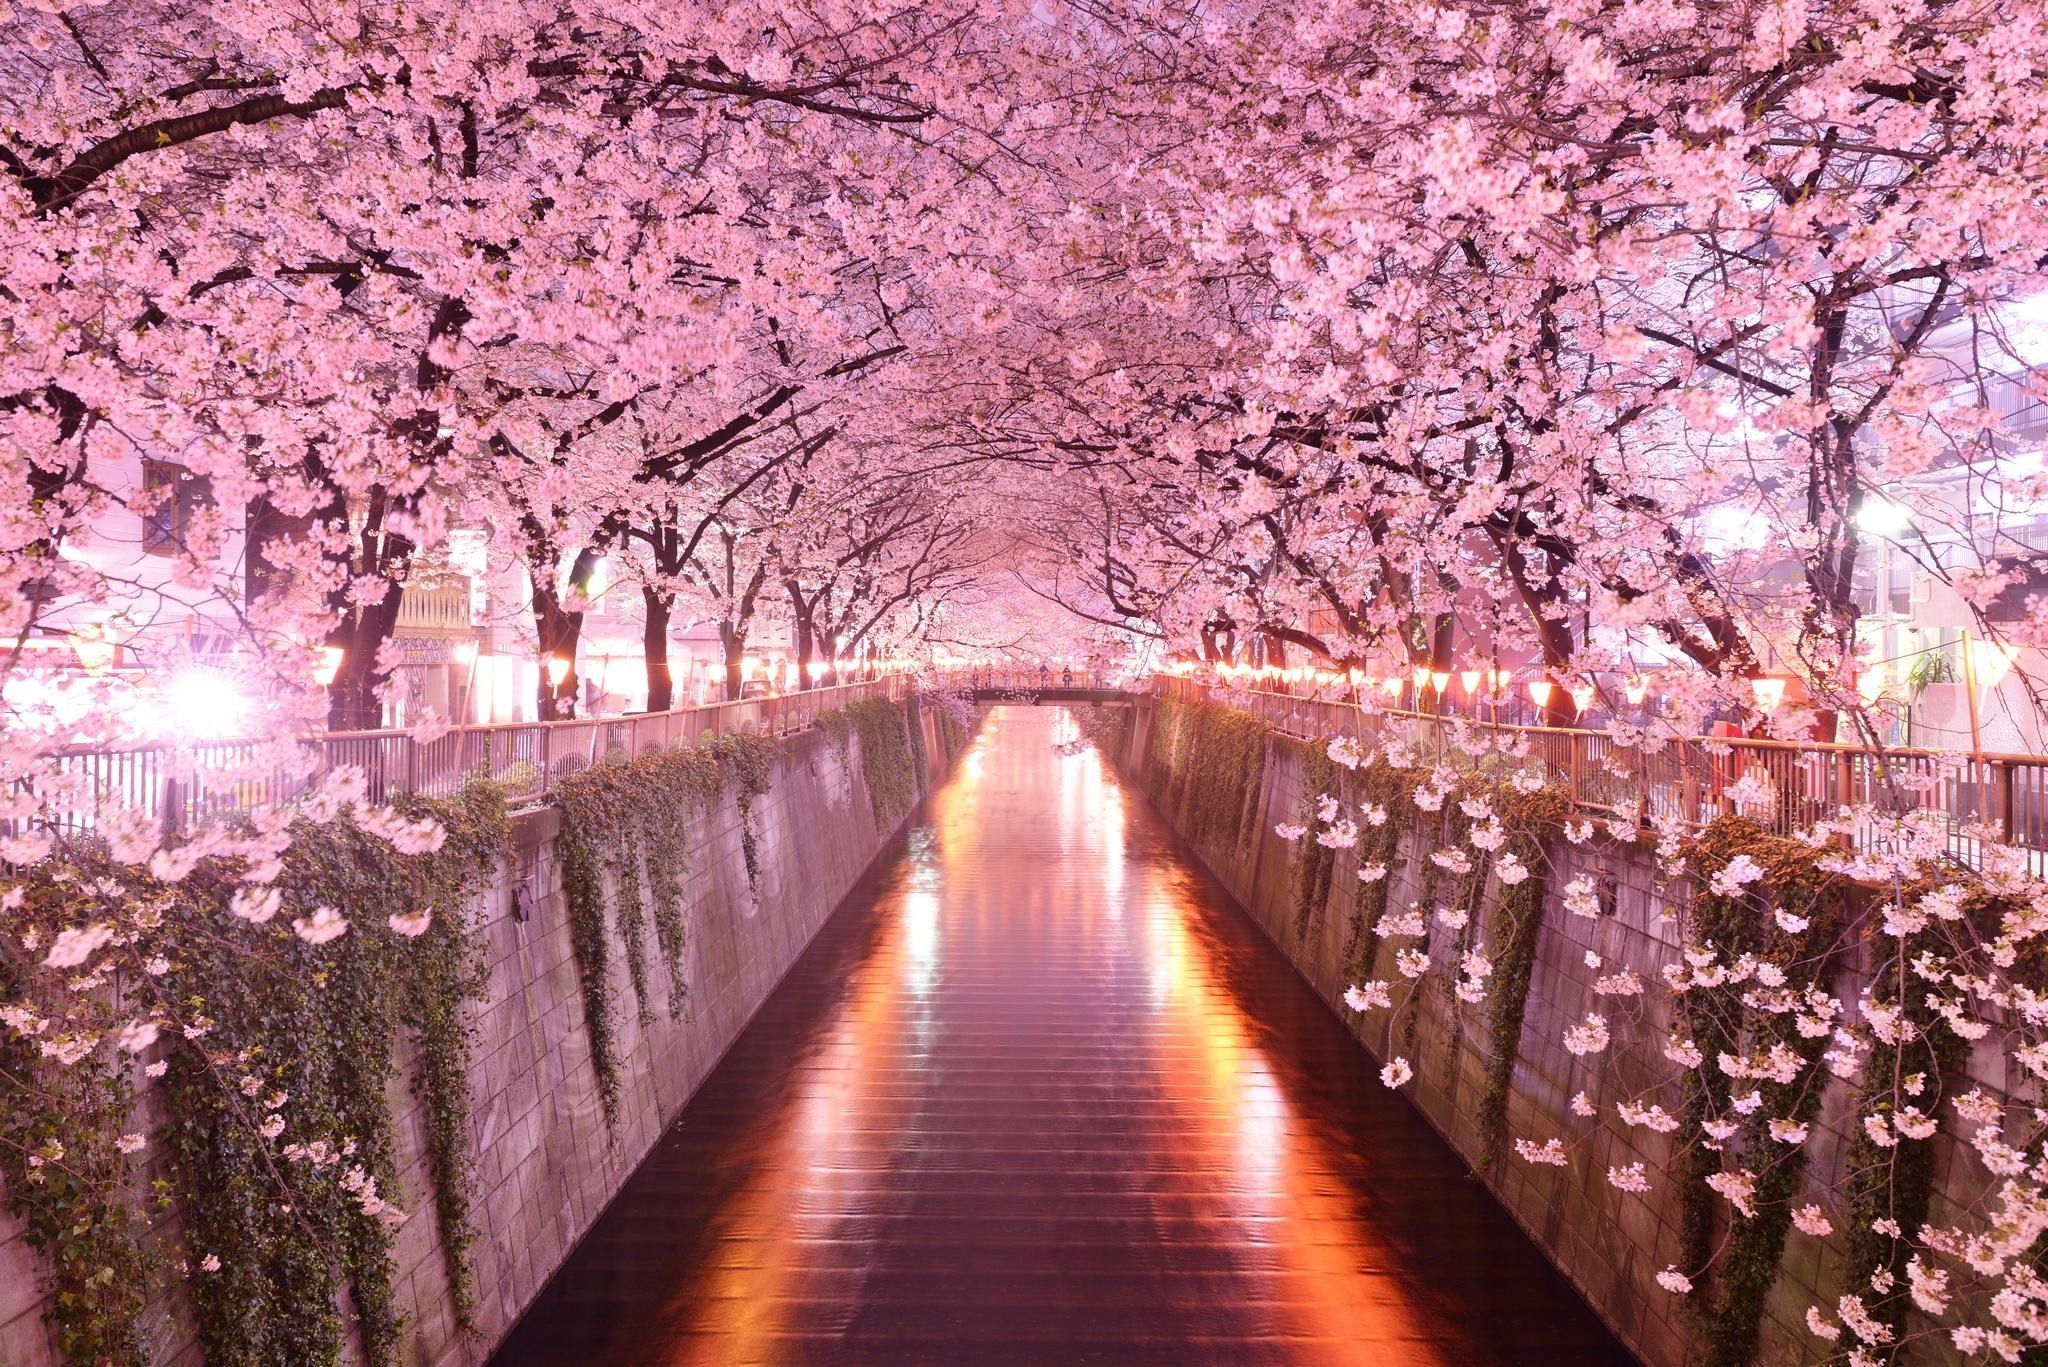 Cherry blossom desktop s on